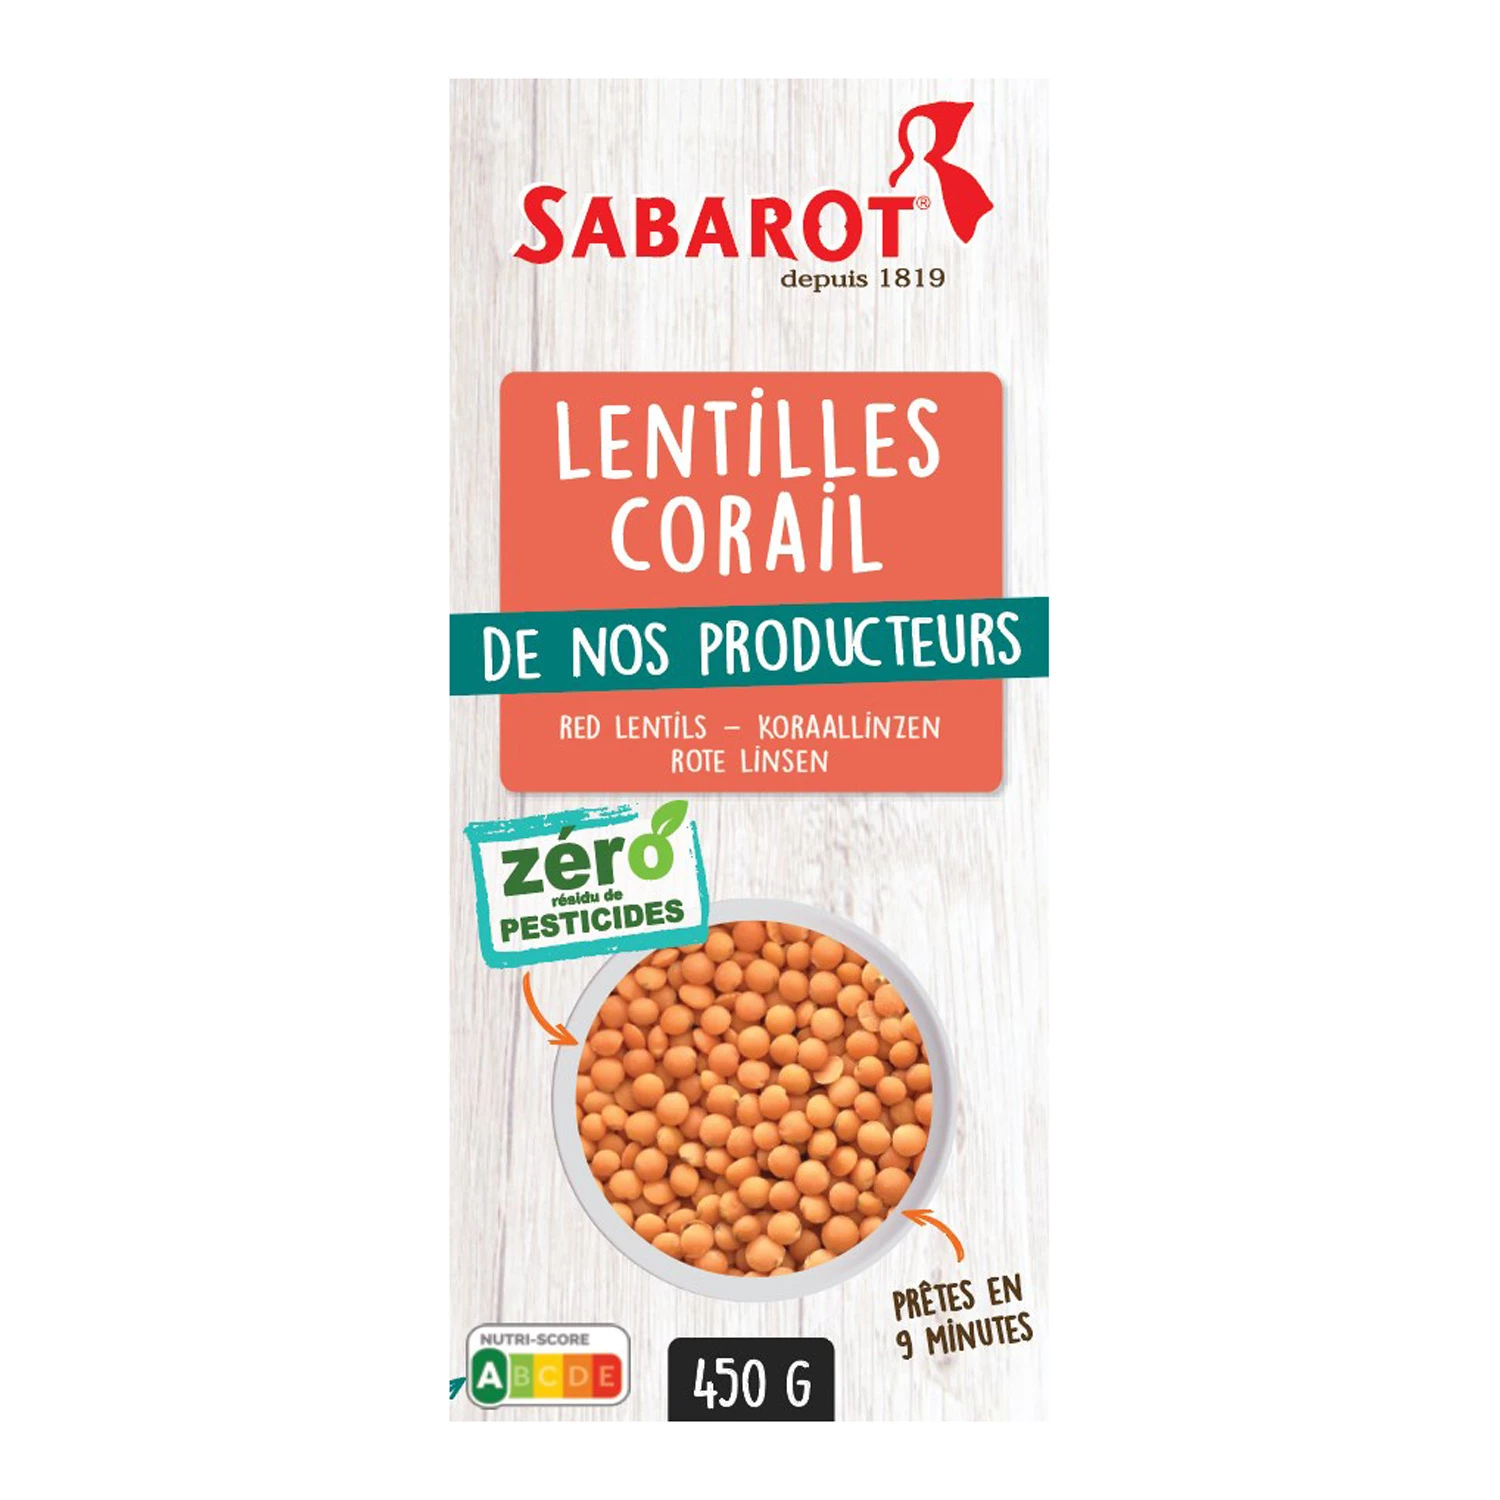 Lentilles corail, 450g - SABAROT